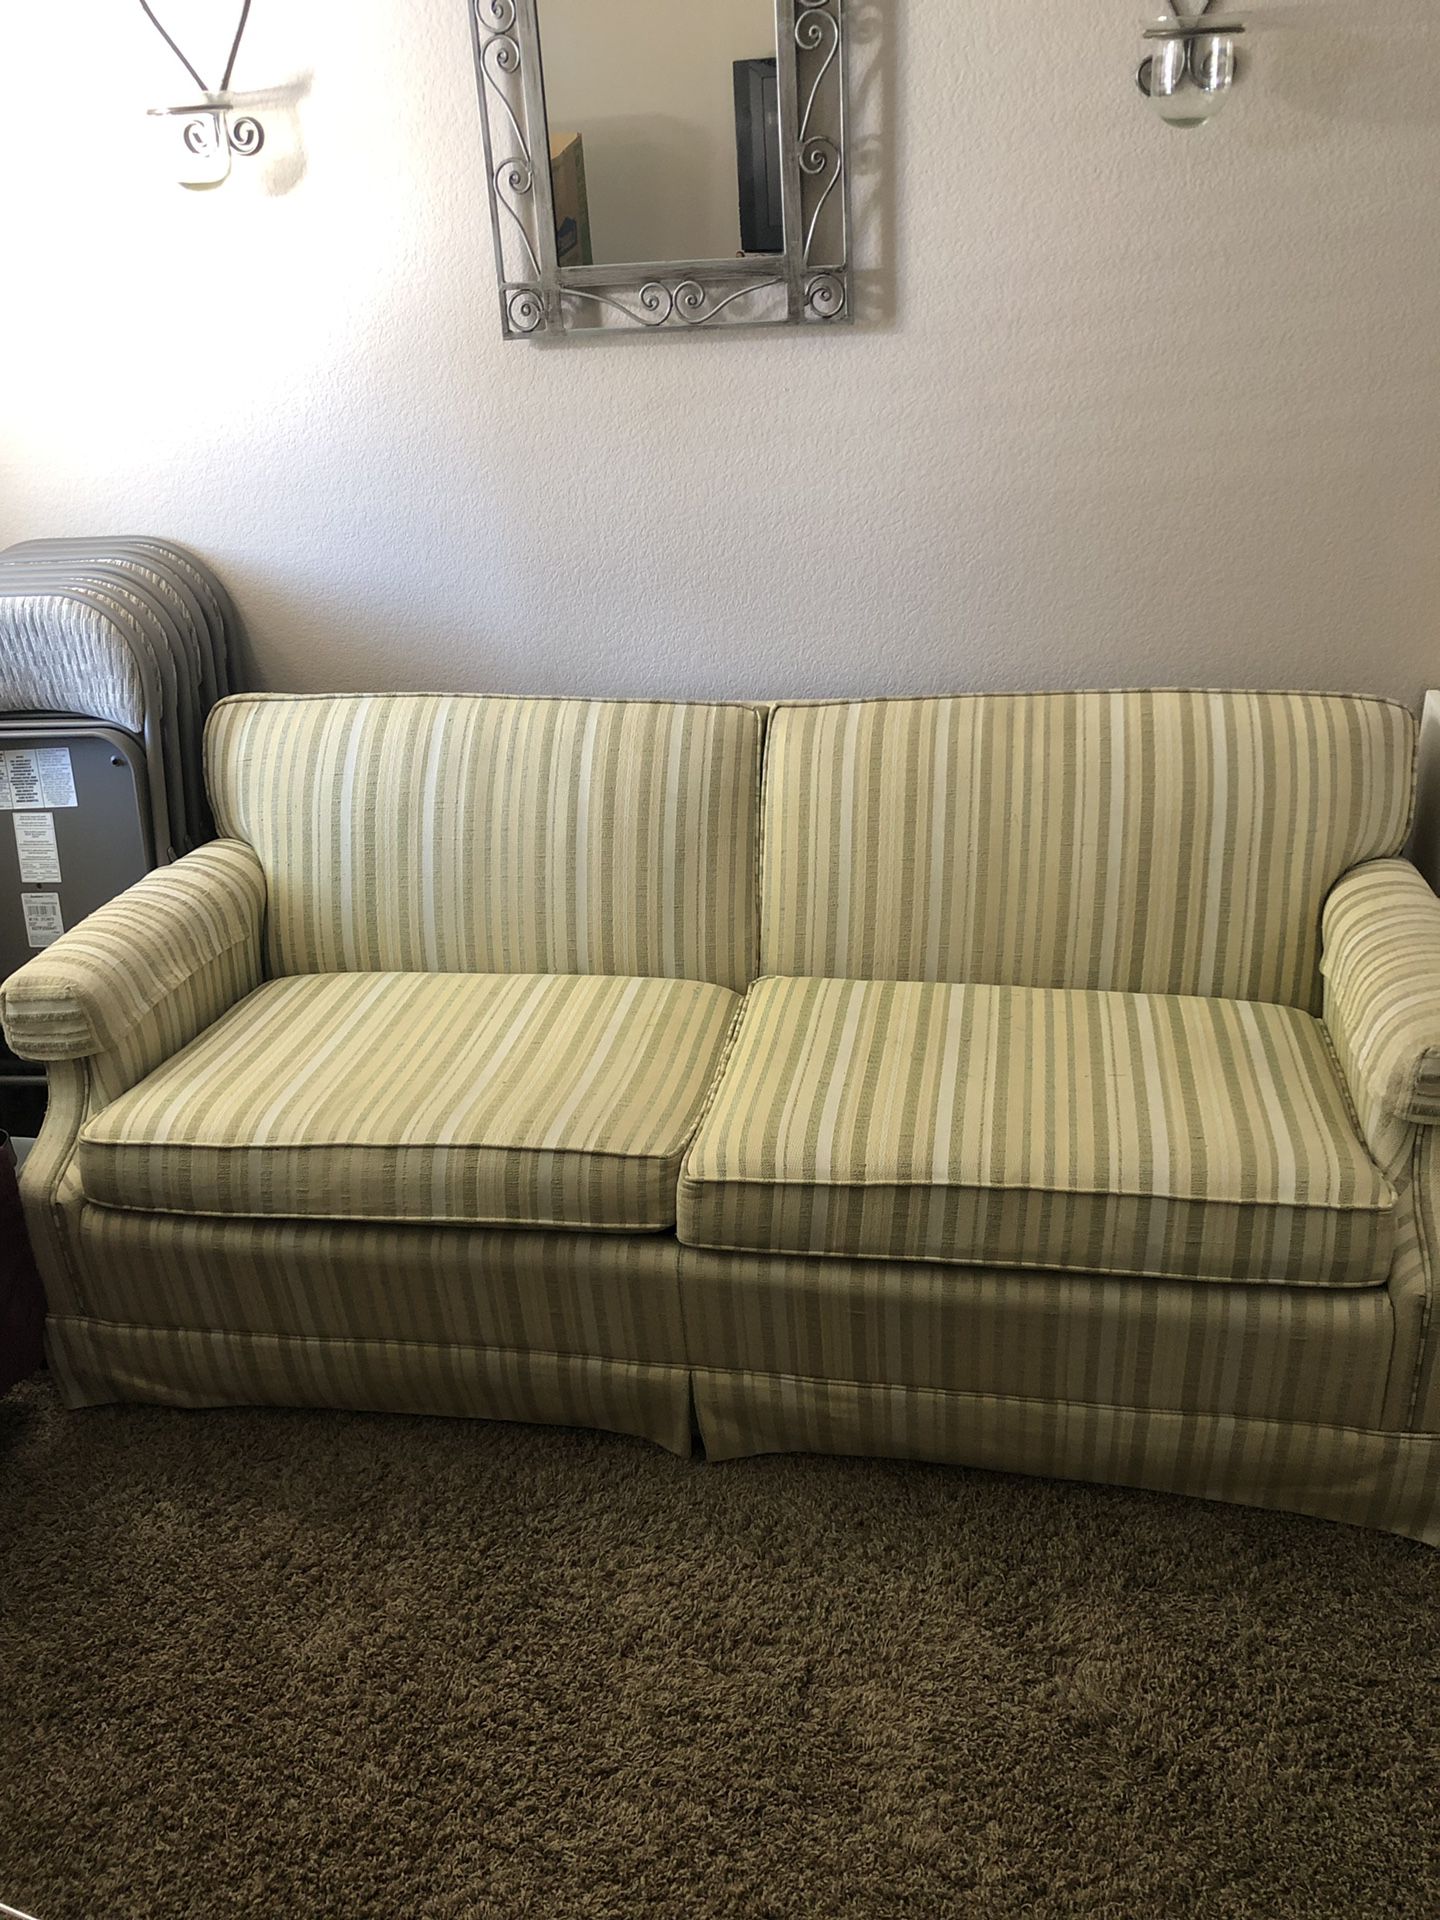 Ethan Allen Sleeper Sofa - $85.00